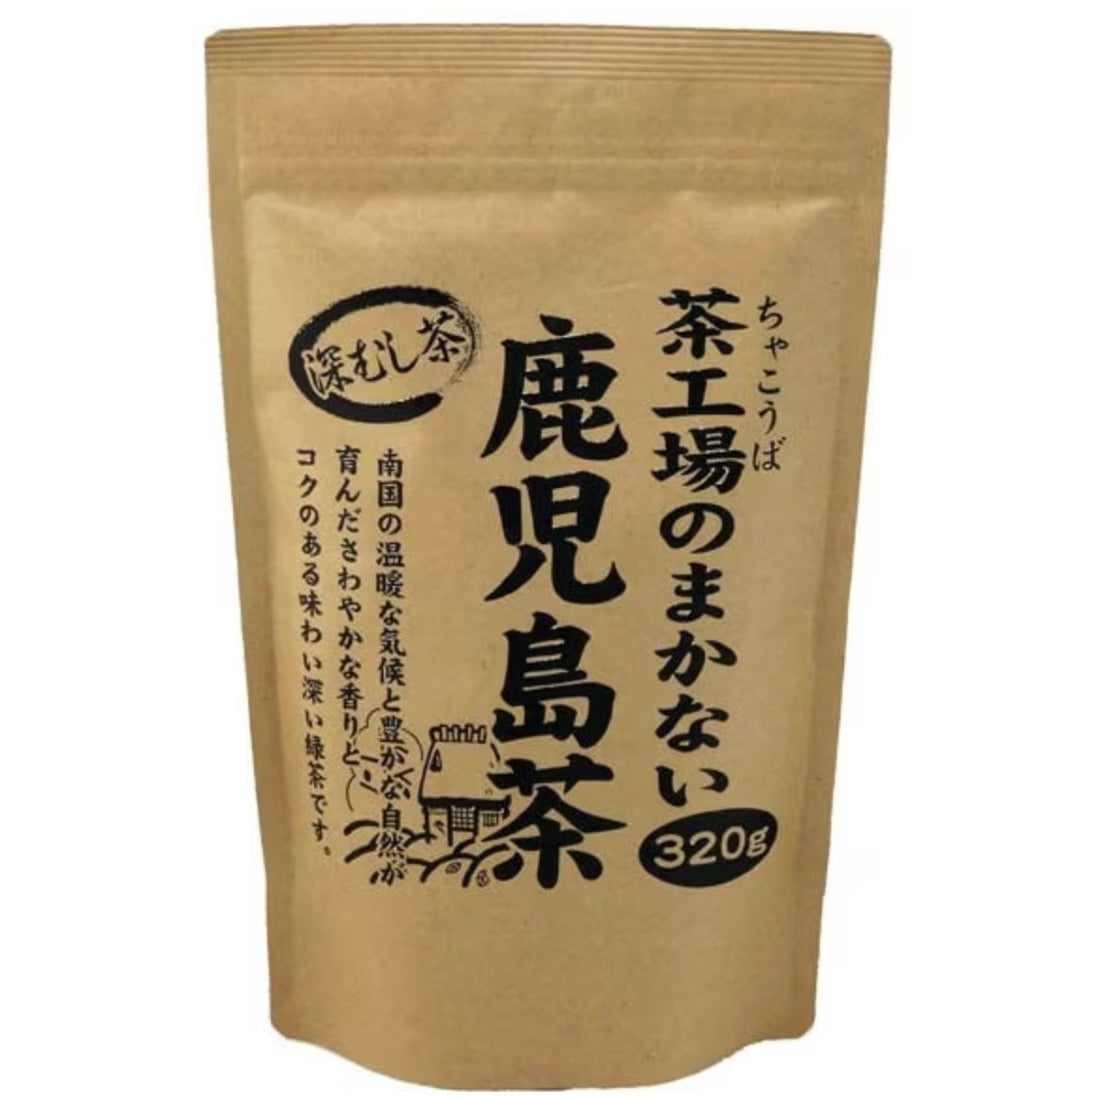 Oigawa Tea Garden Kagoshima tea from Tea Factory 320g - NihonMura